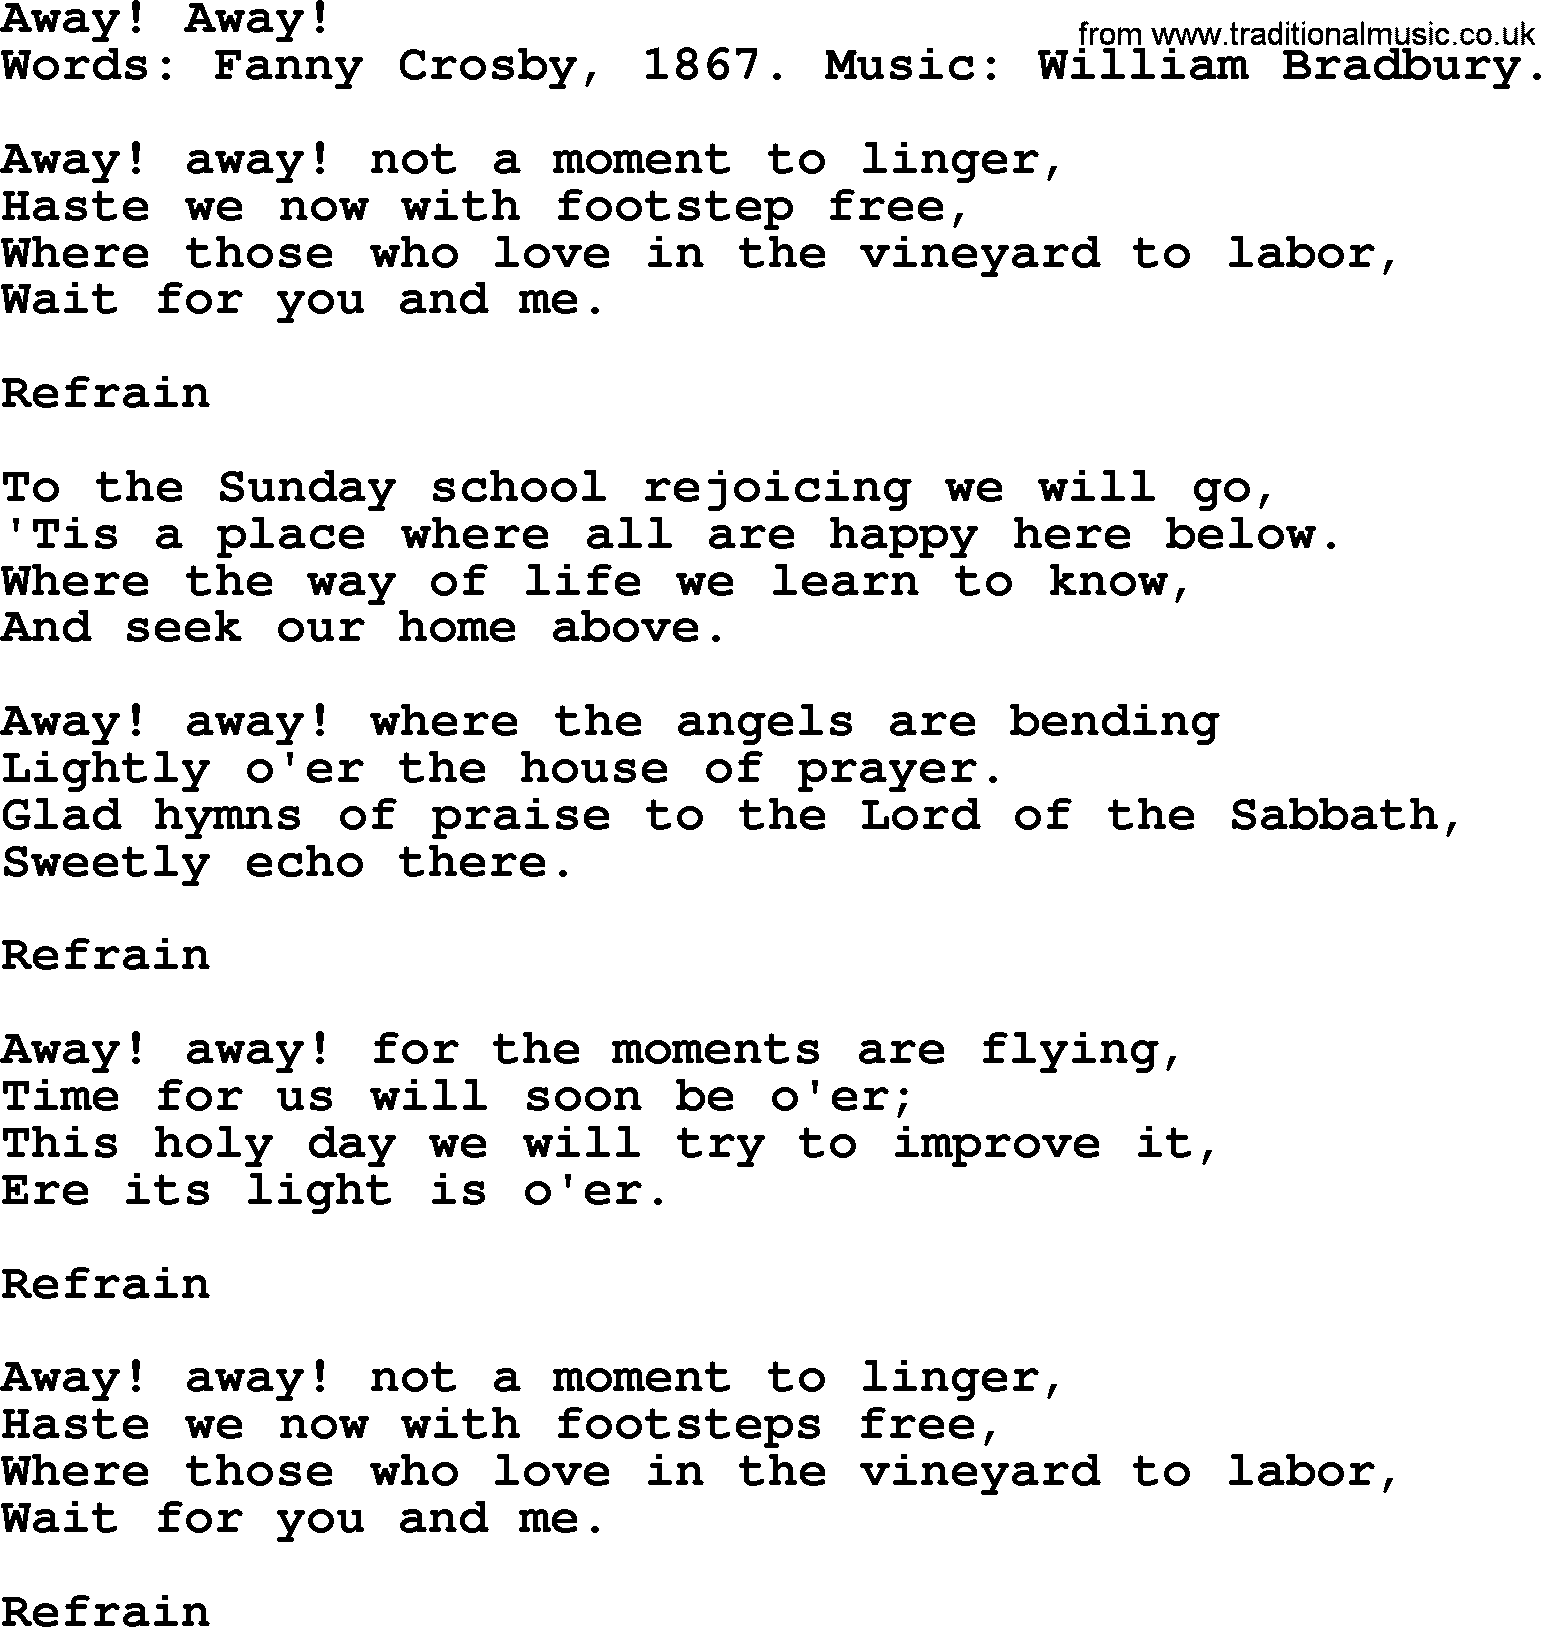 Fanny Crosby song: Away! Away!, lyrics